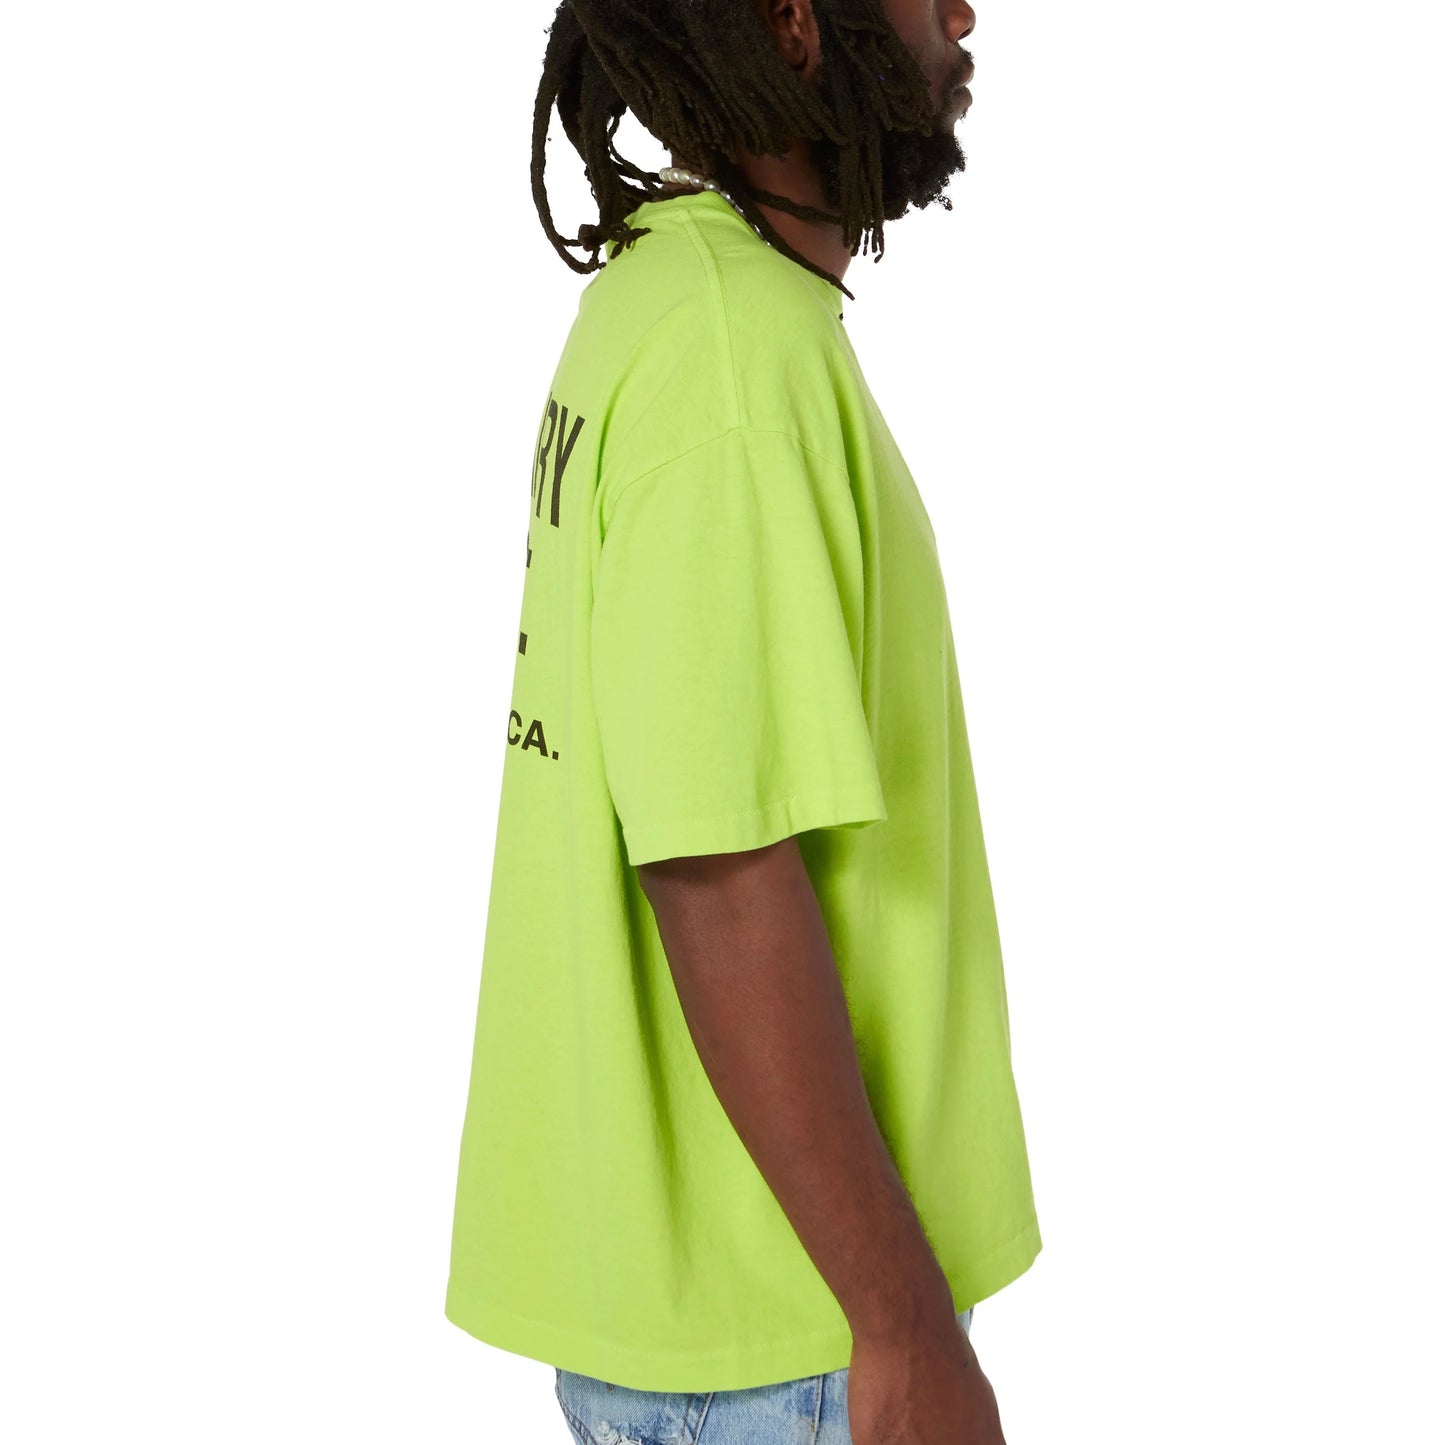 Gallery Dept Lime Green Souvenir T-Shirt On Body View 6